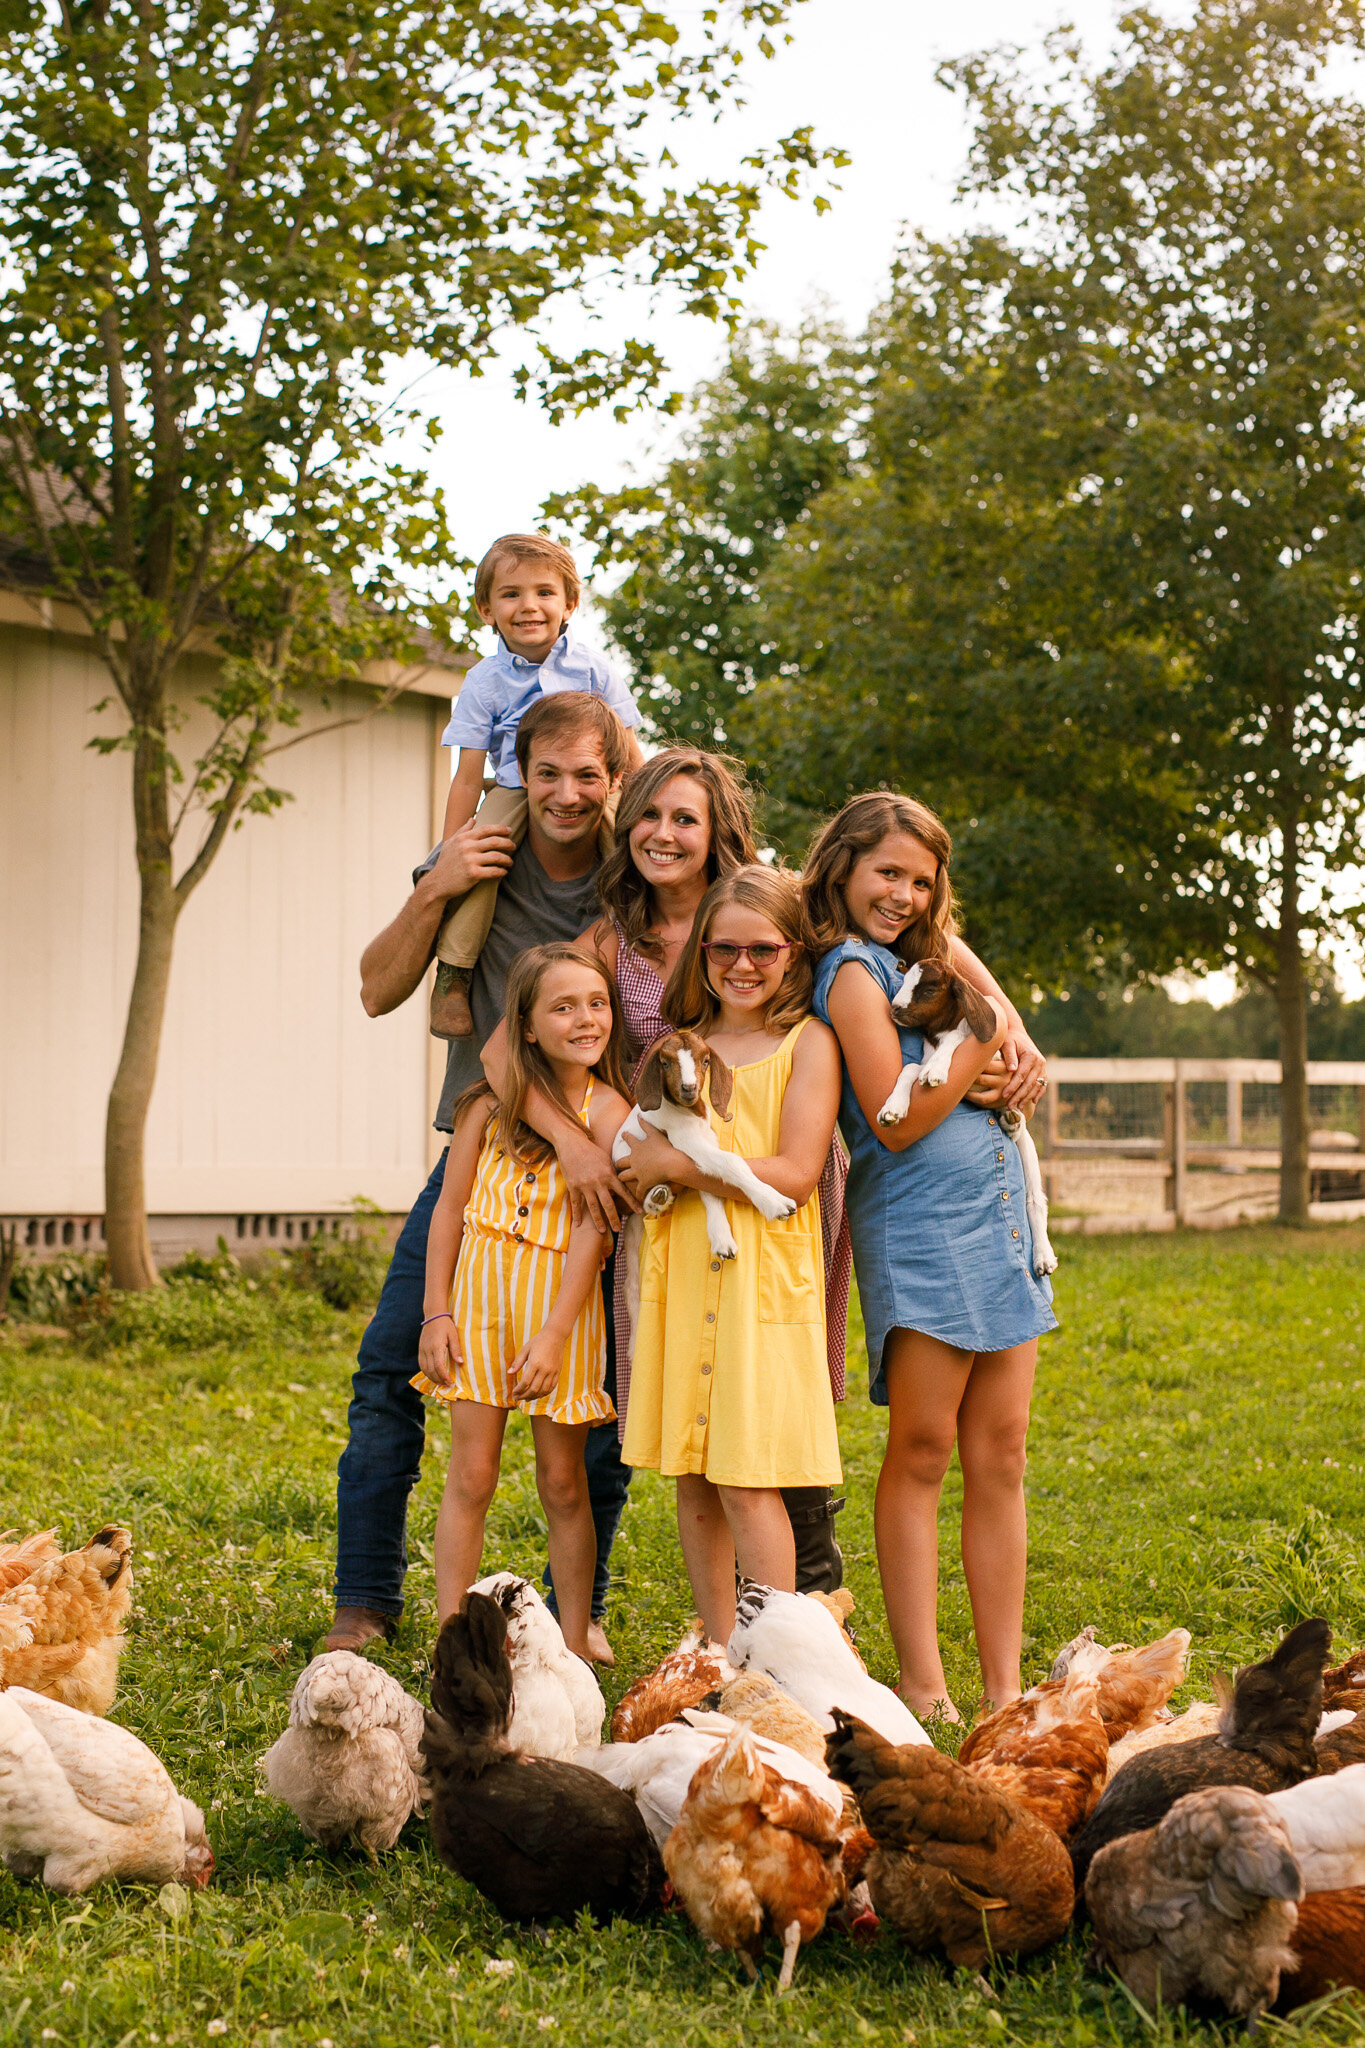 Grand Rapids Lifestyle Family Photographer - West Michigan Family Photography - Farm living - farm family photos - j darling photo - rockford family photographer - torren family 006.jpg